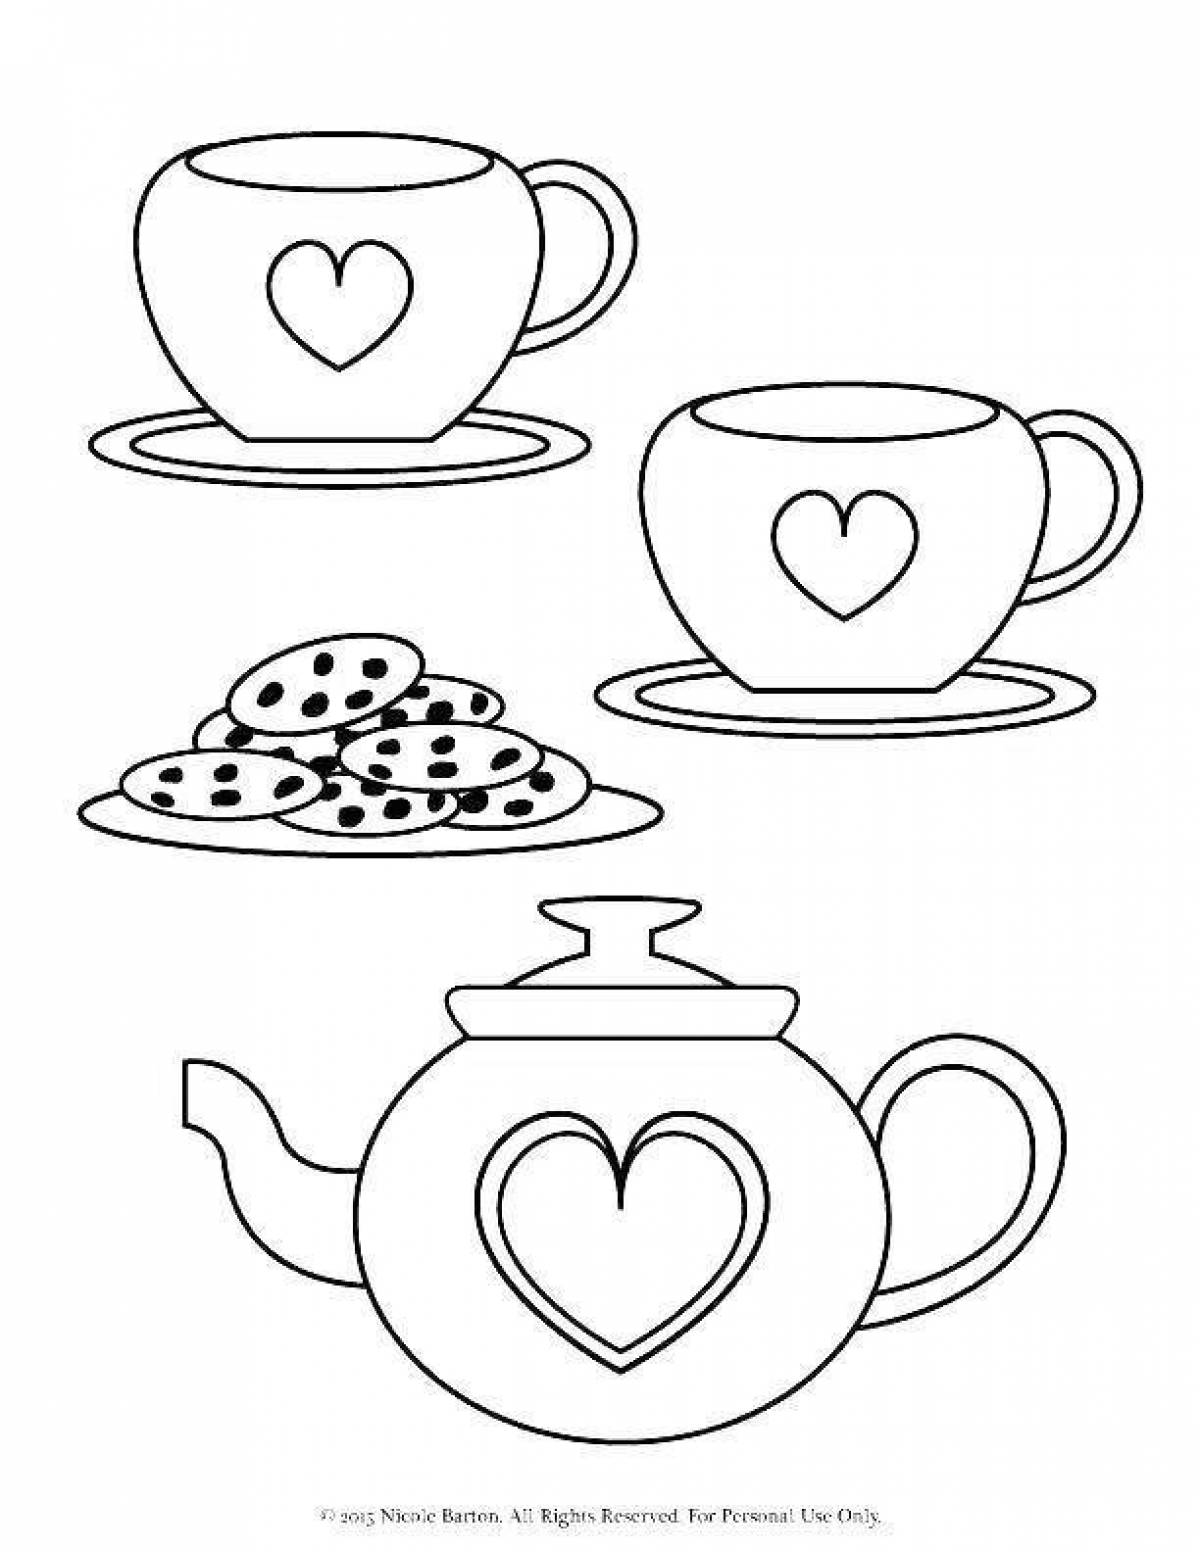 Coloring page wonderful tea set